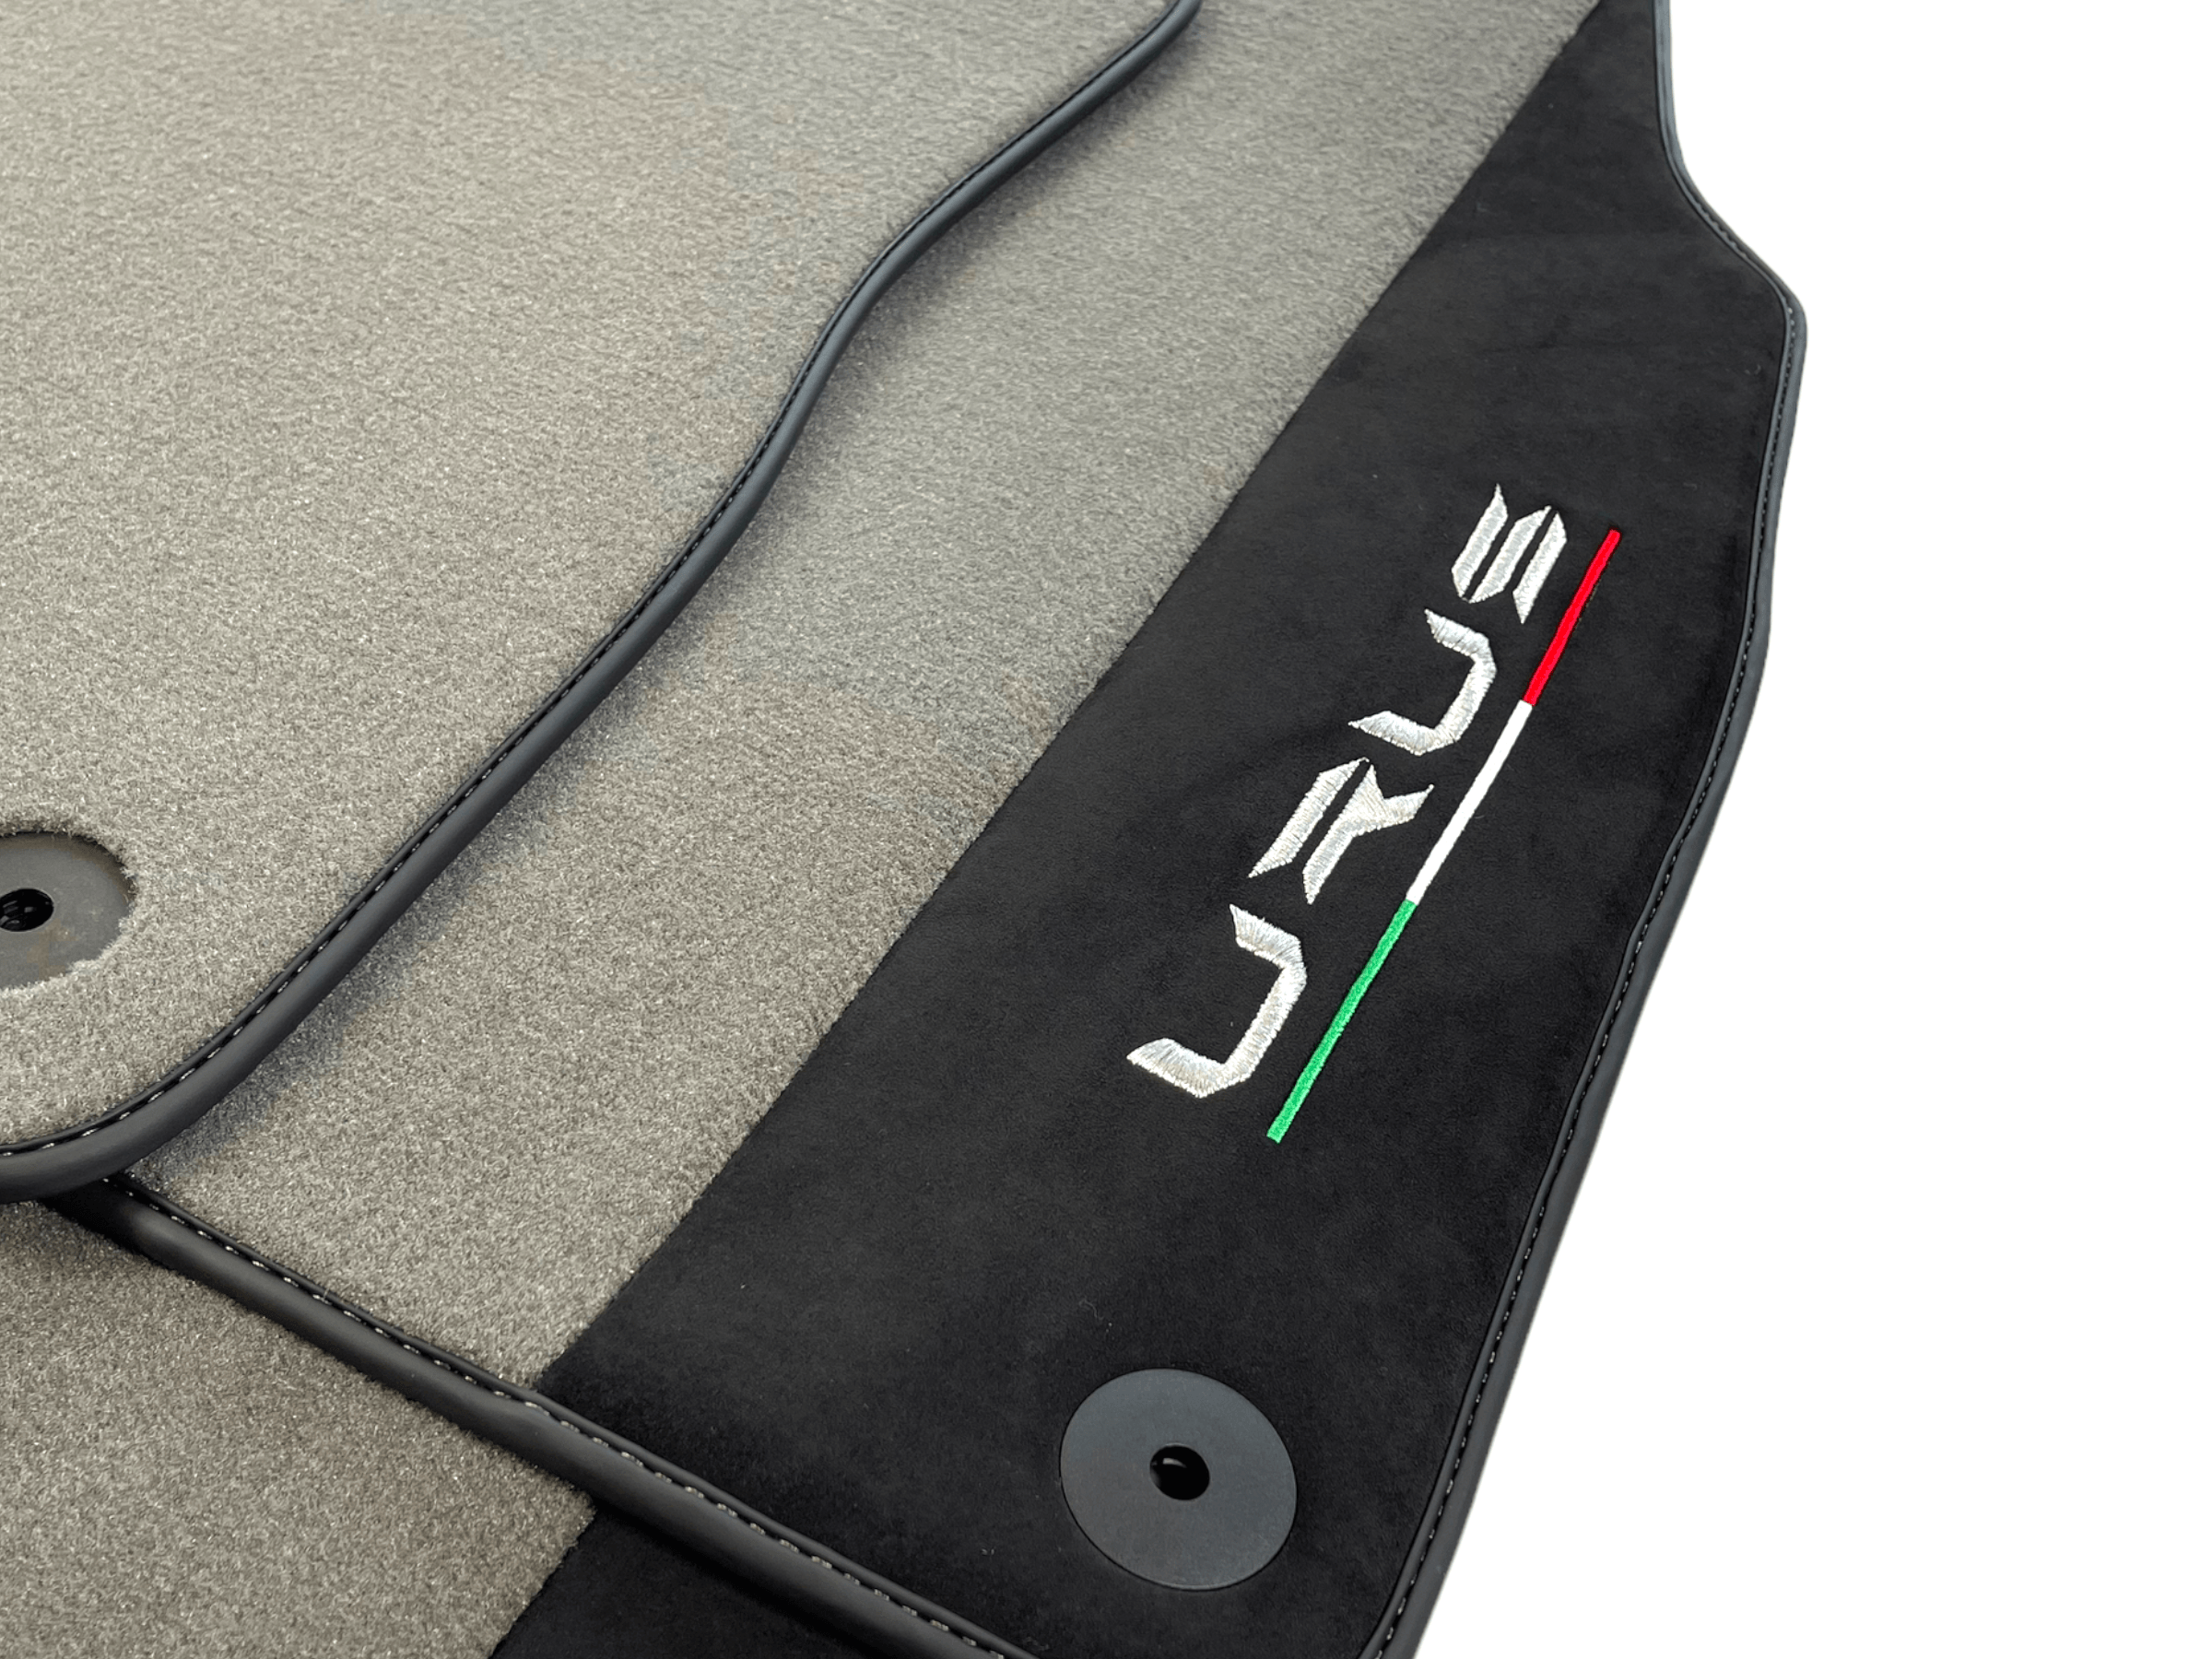 Gray Floor Mats For Lamborghini Urus With Alcantara Leather - AutoWin